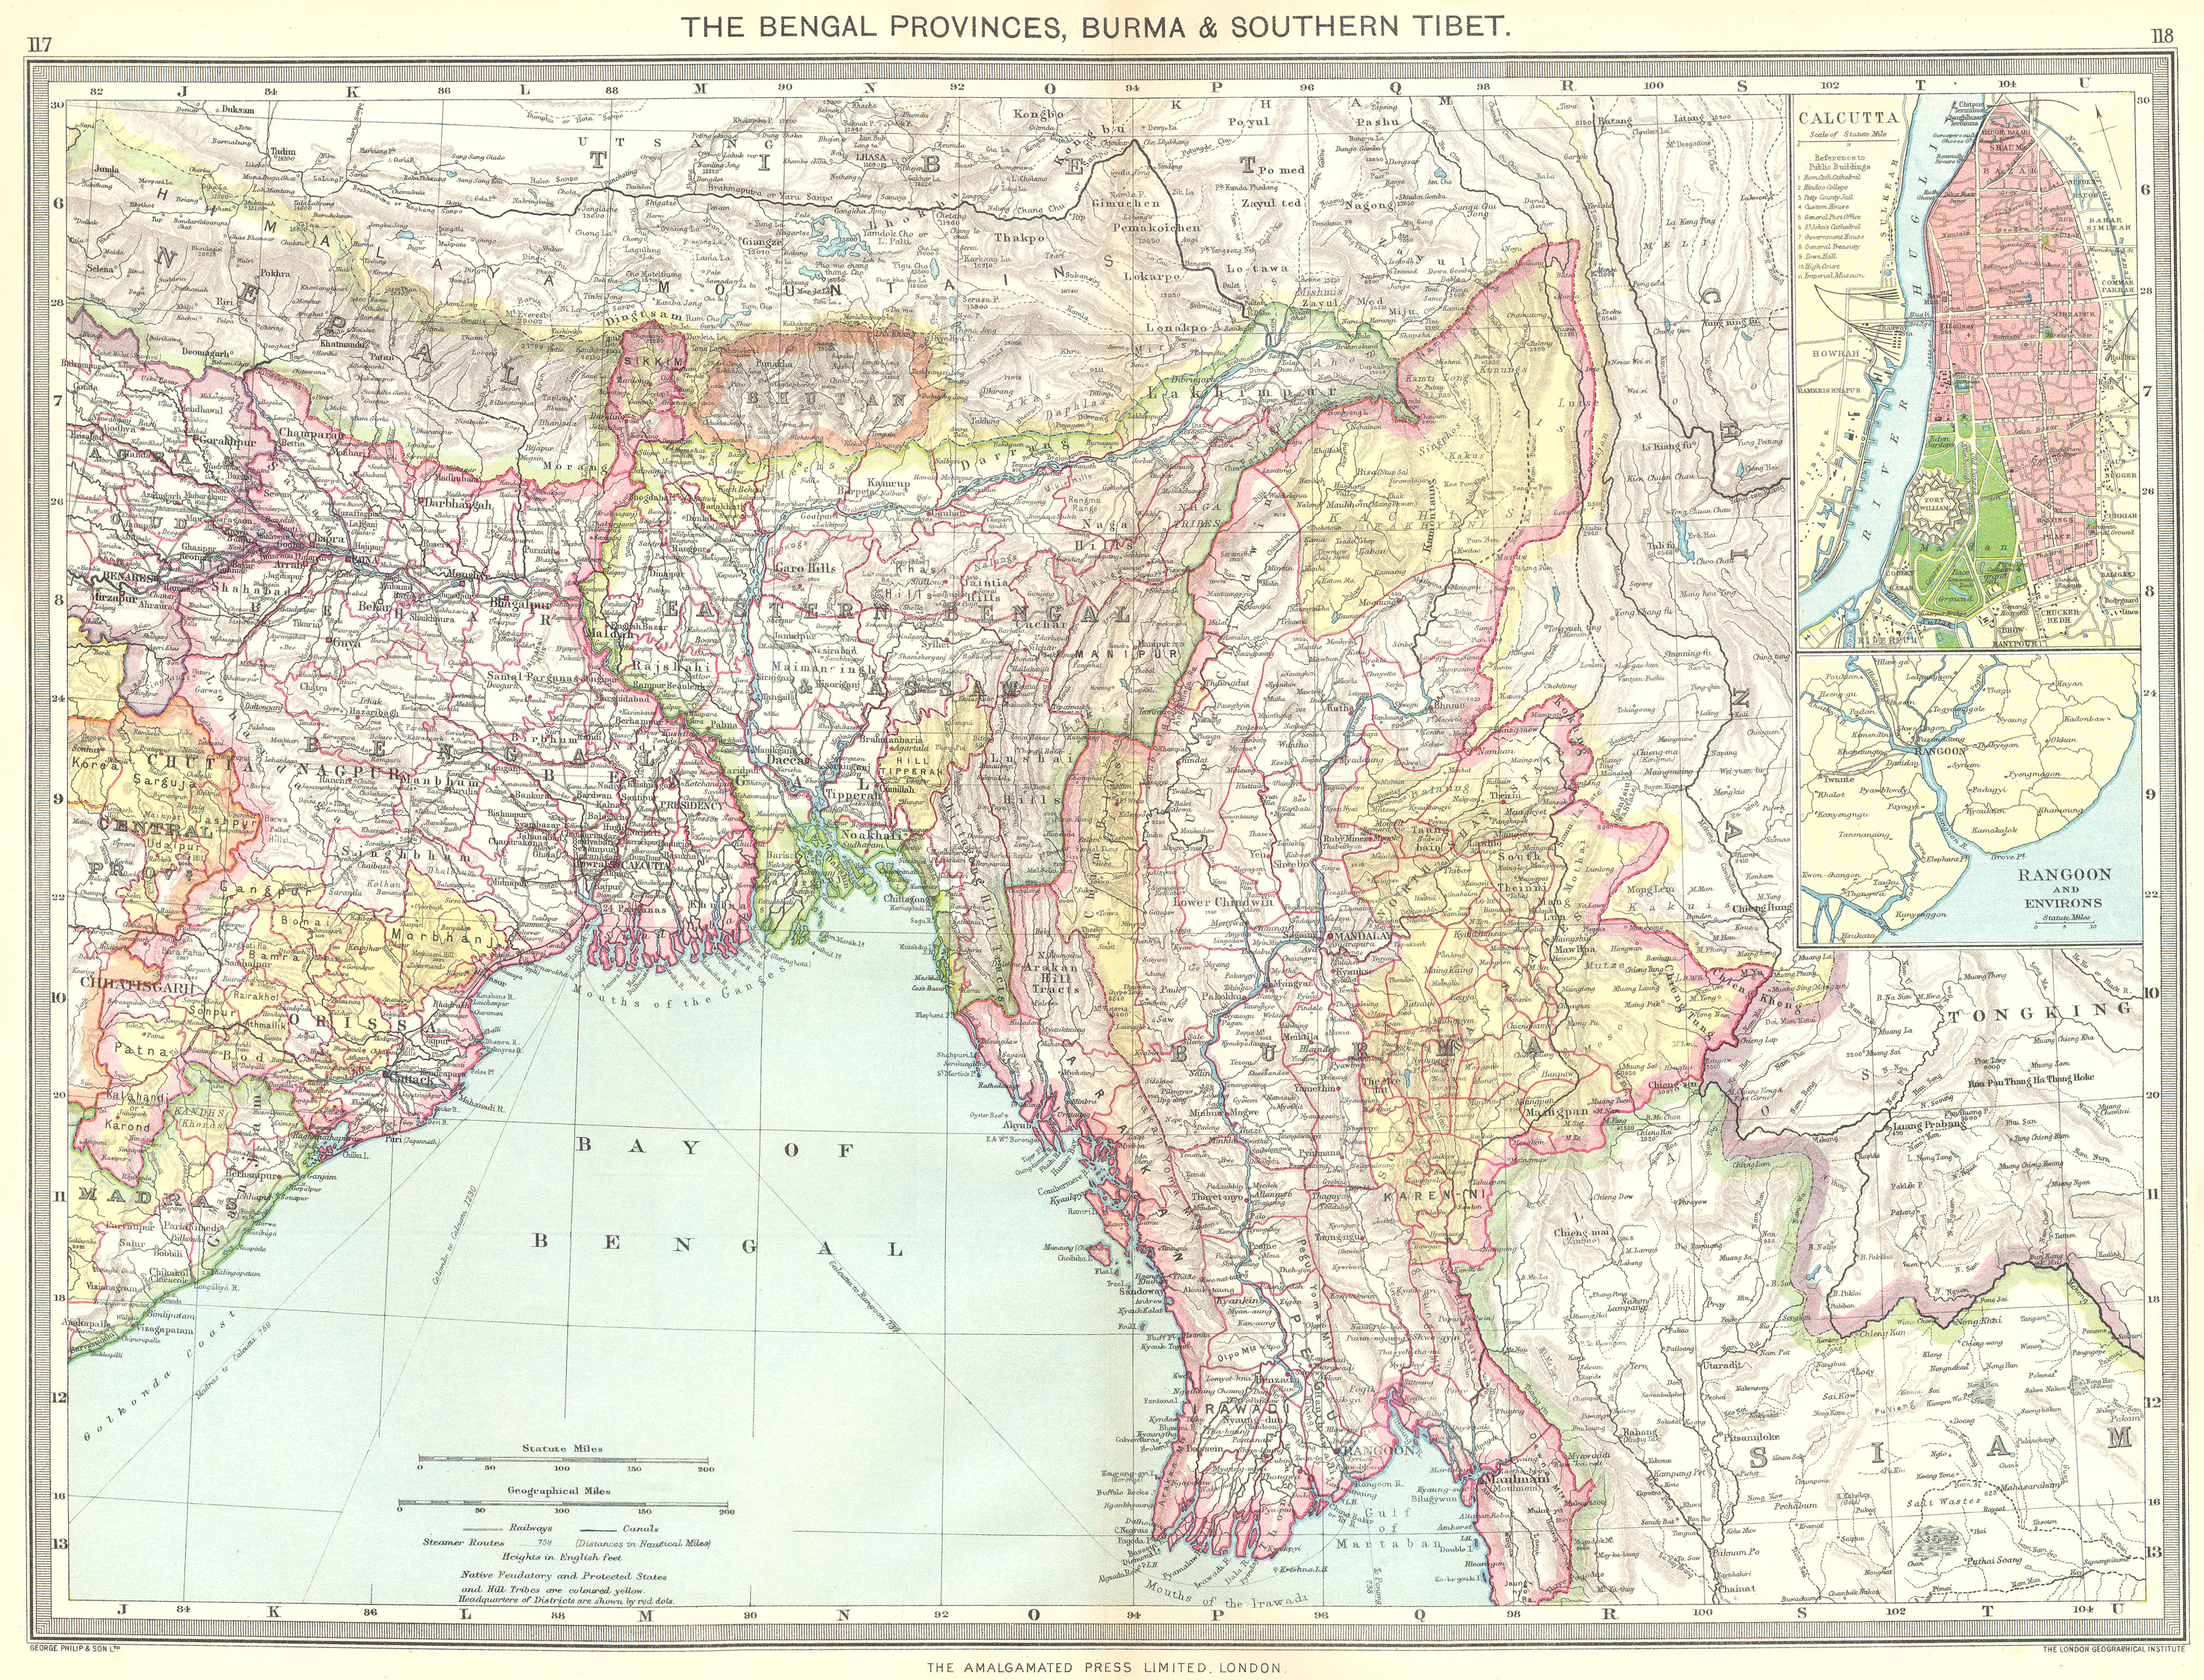 Associate Product INDIA. Bengal Provinces, Burma & Southern Tibet; maps of Kolkata; Rangoon 1907